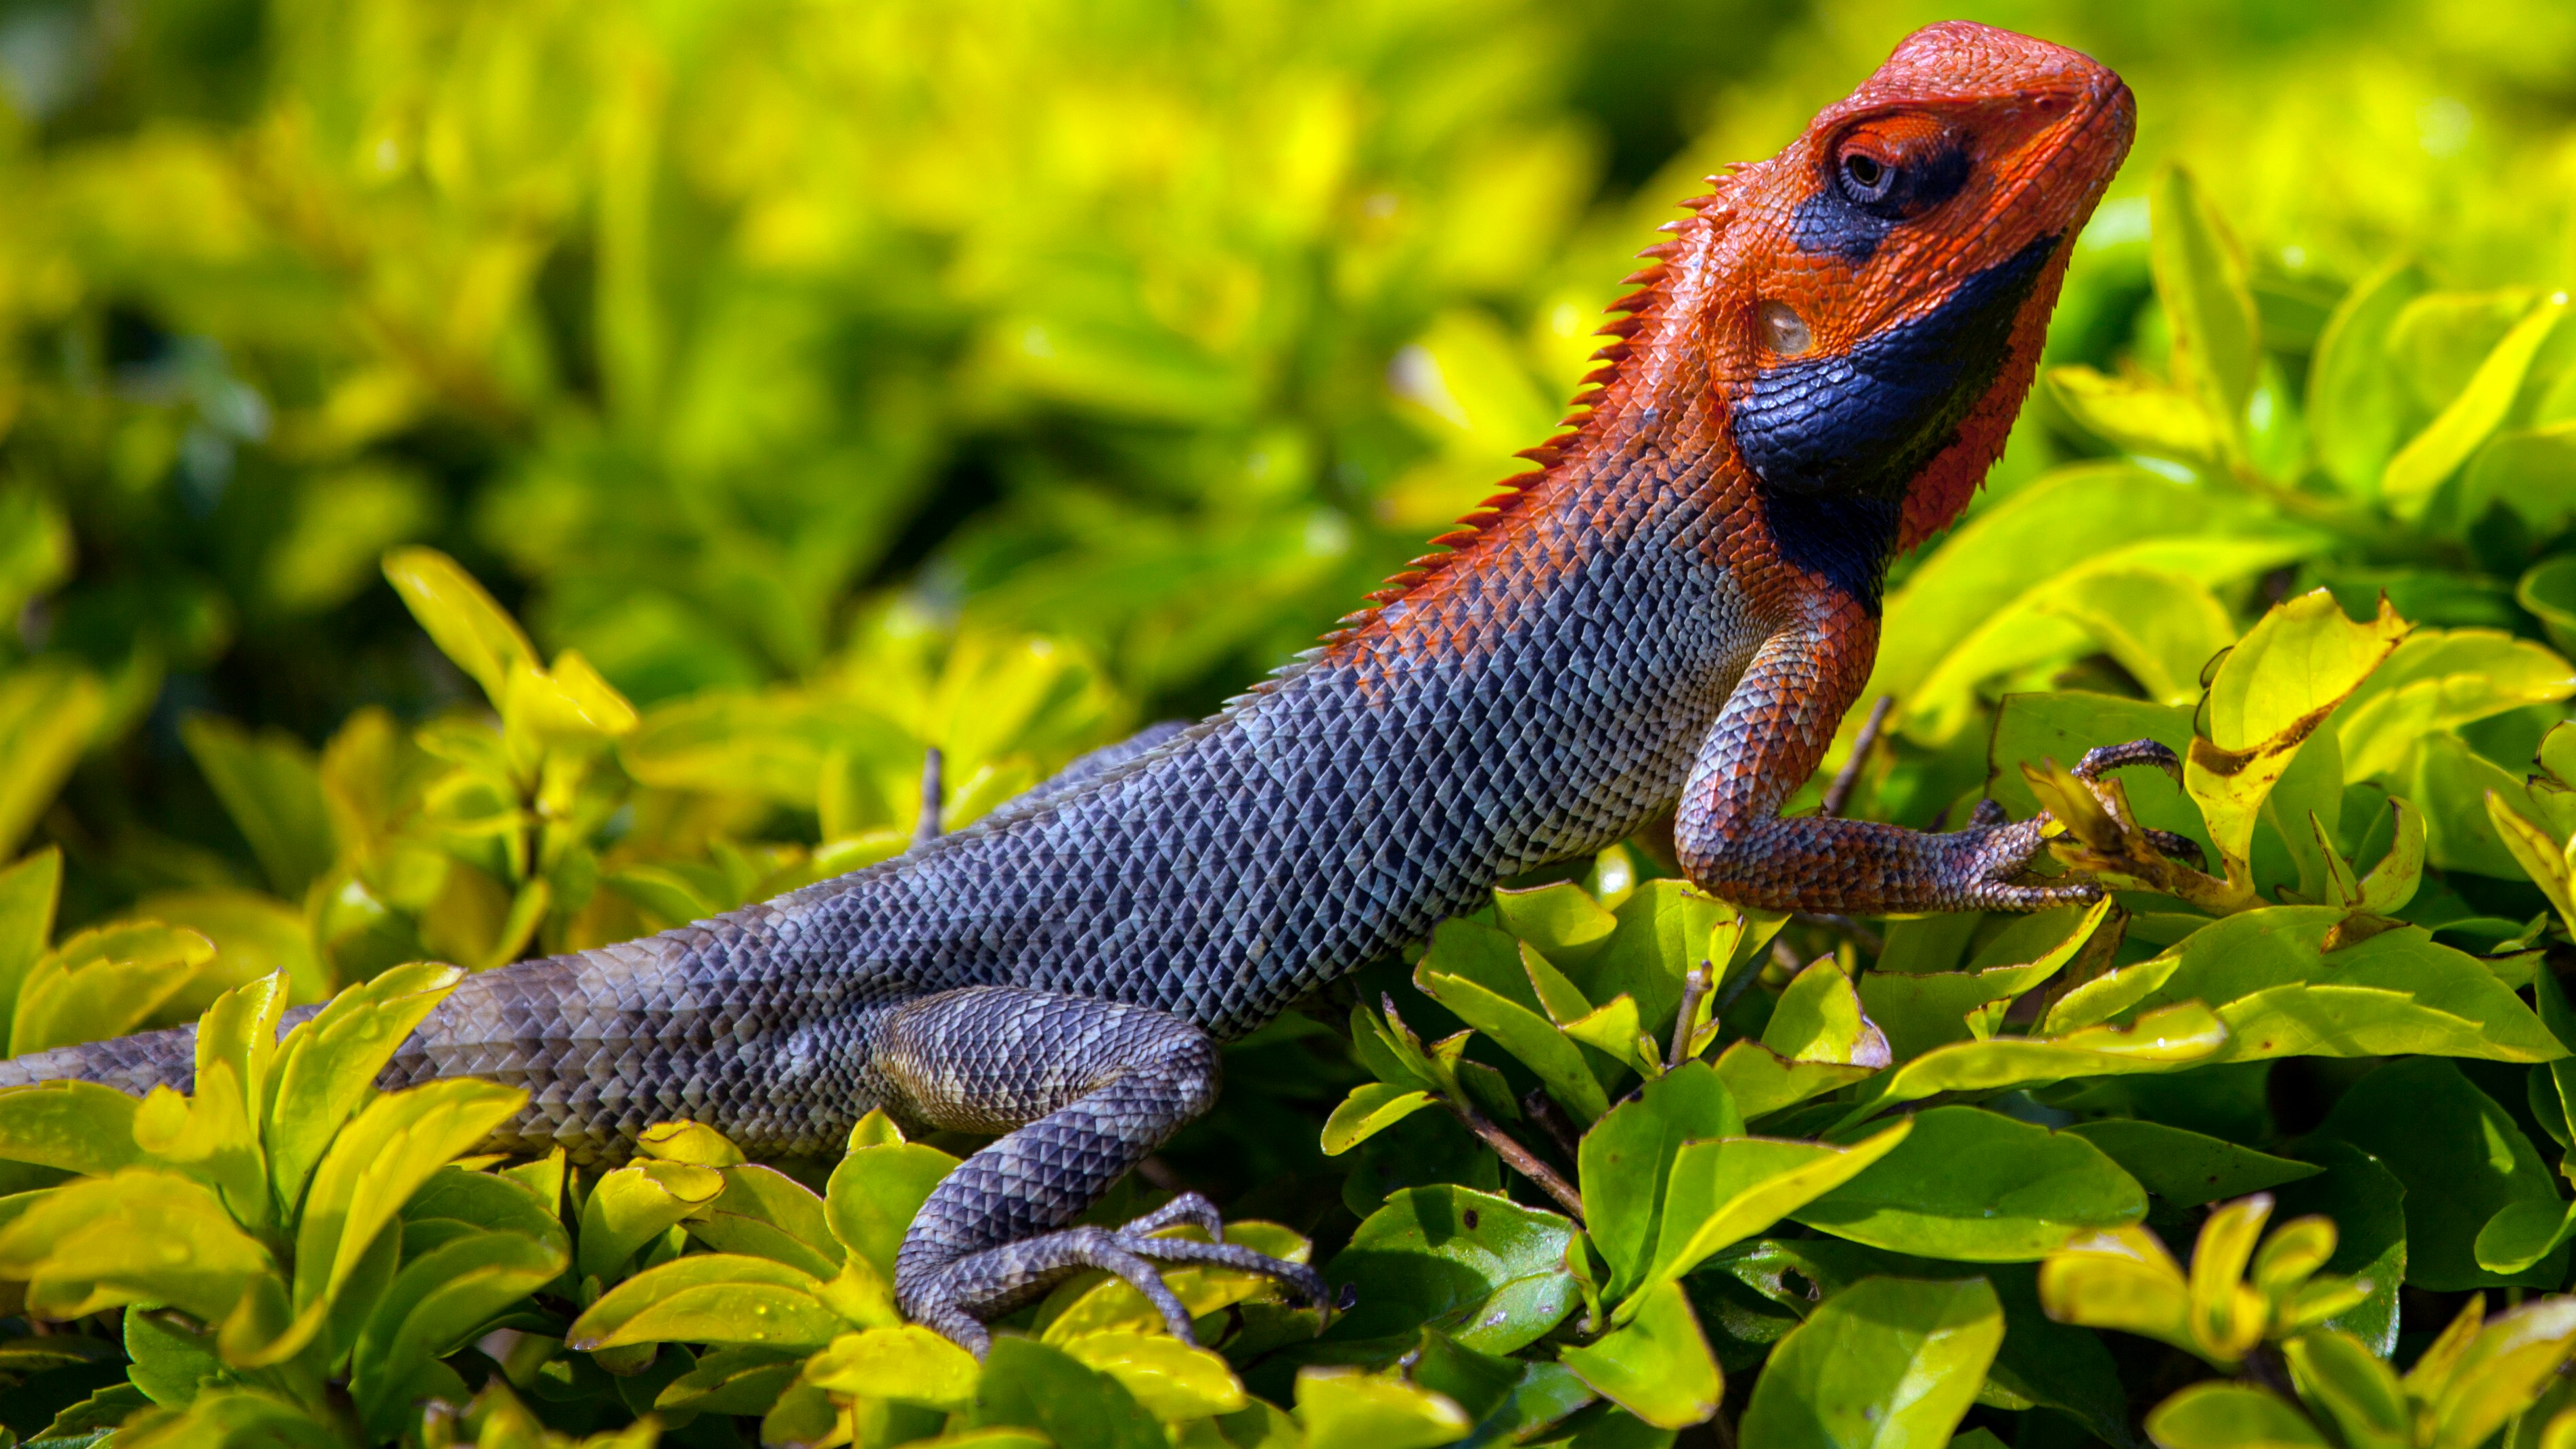 orange and gray Iguana standing on plant